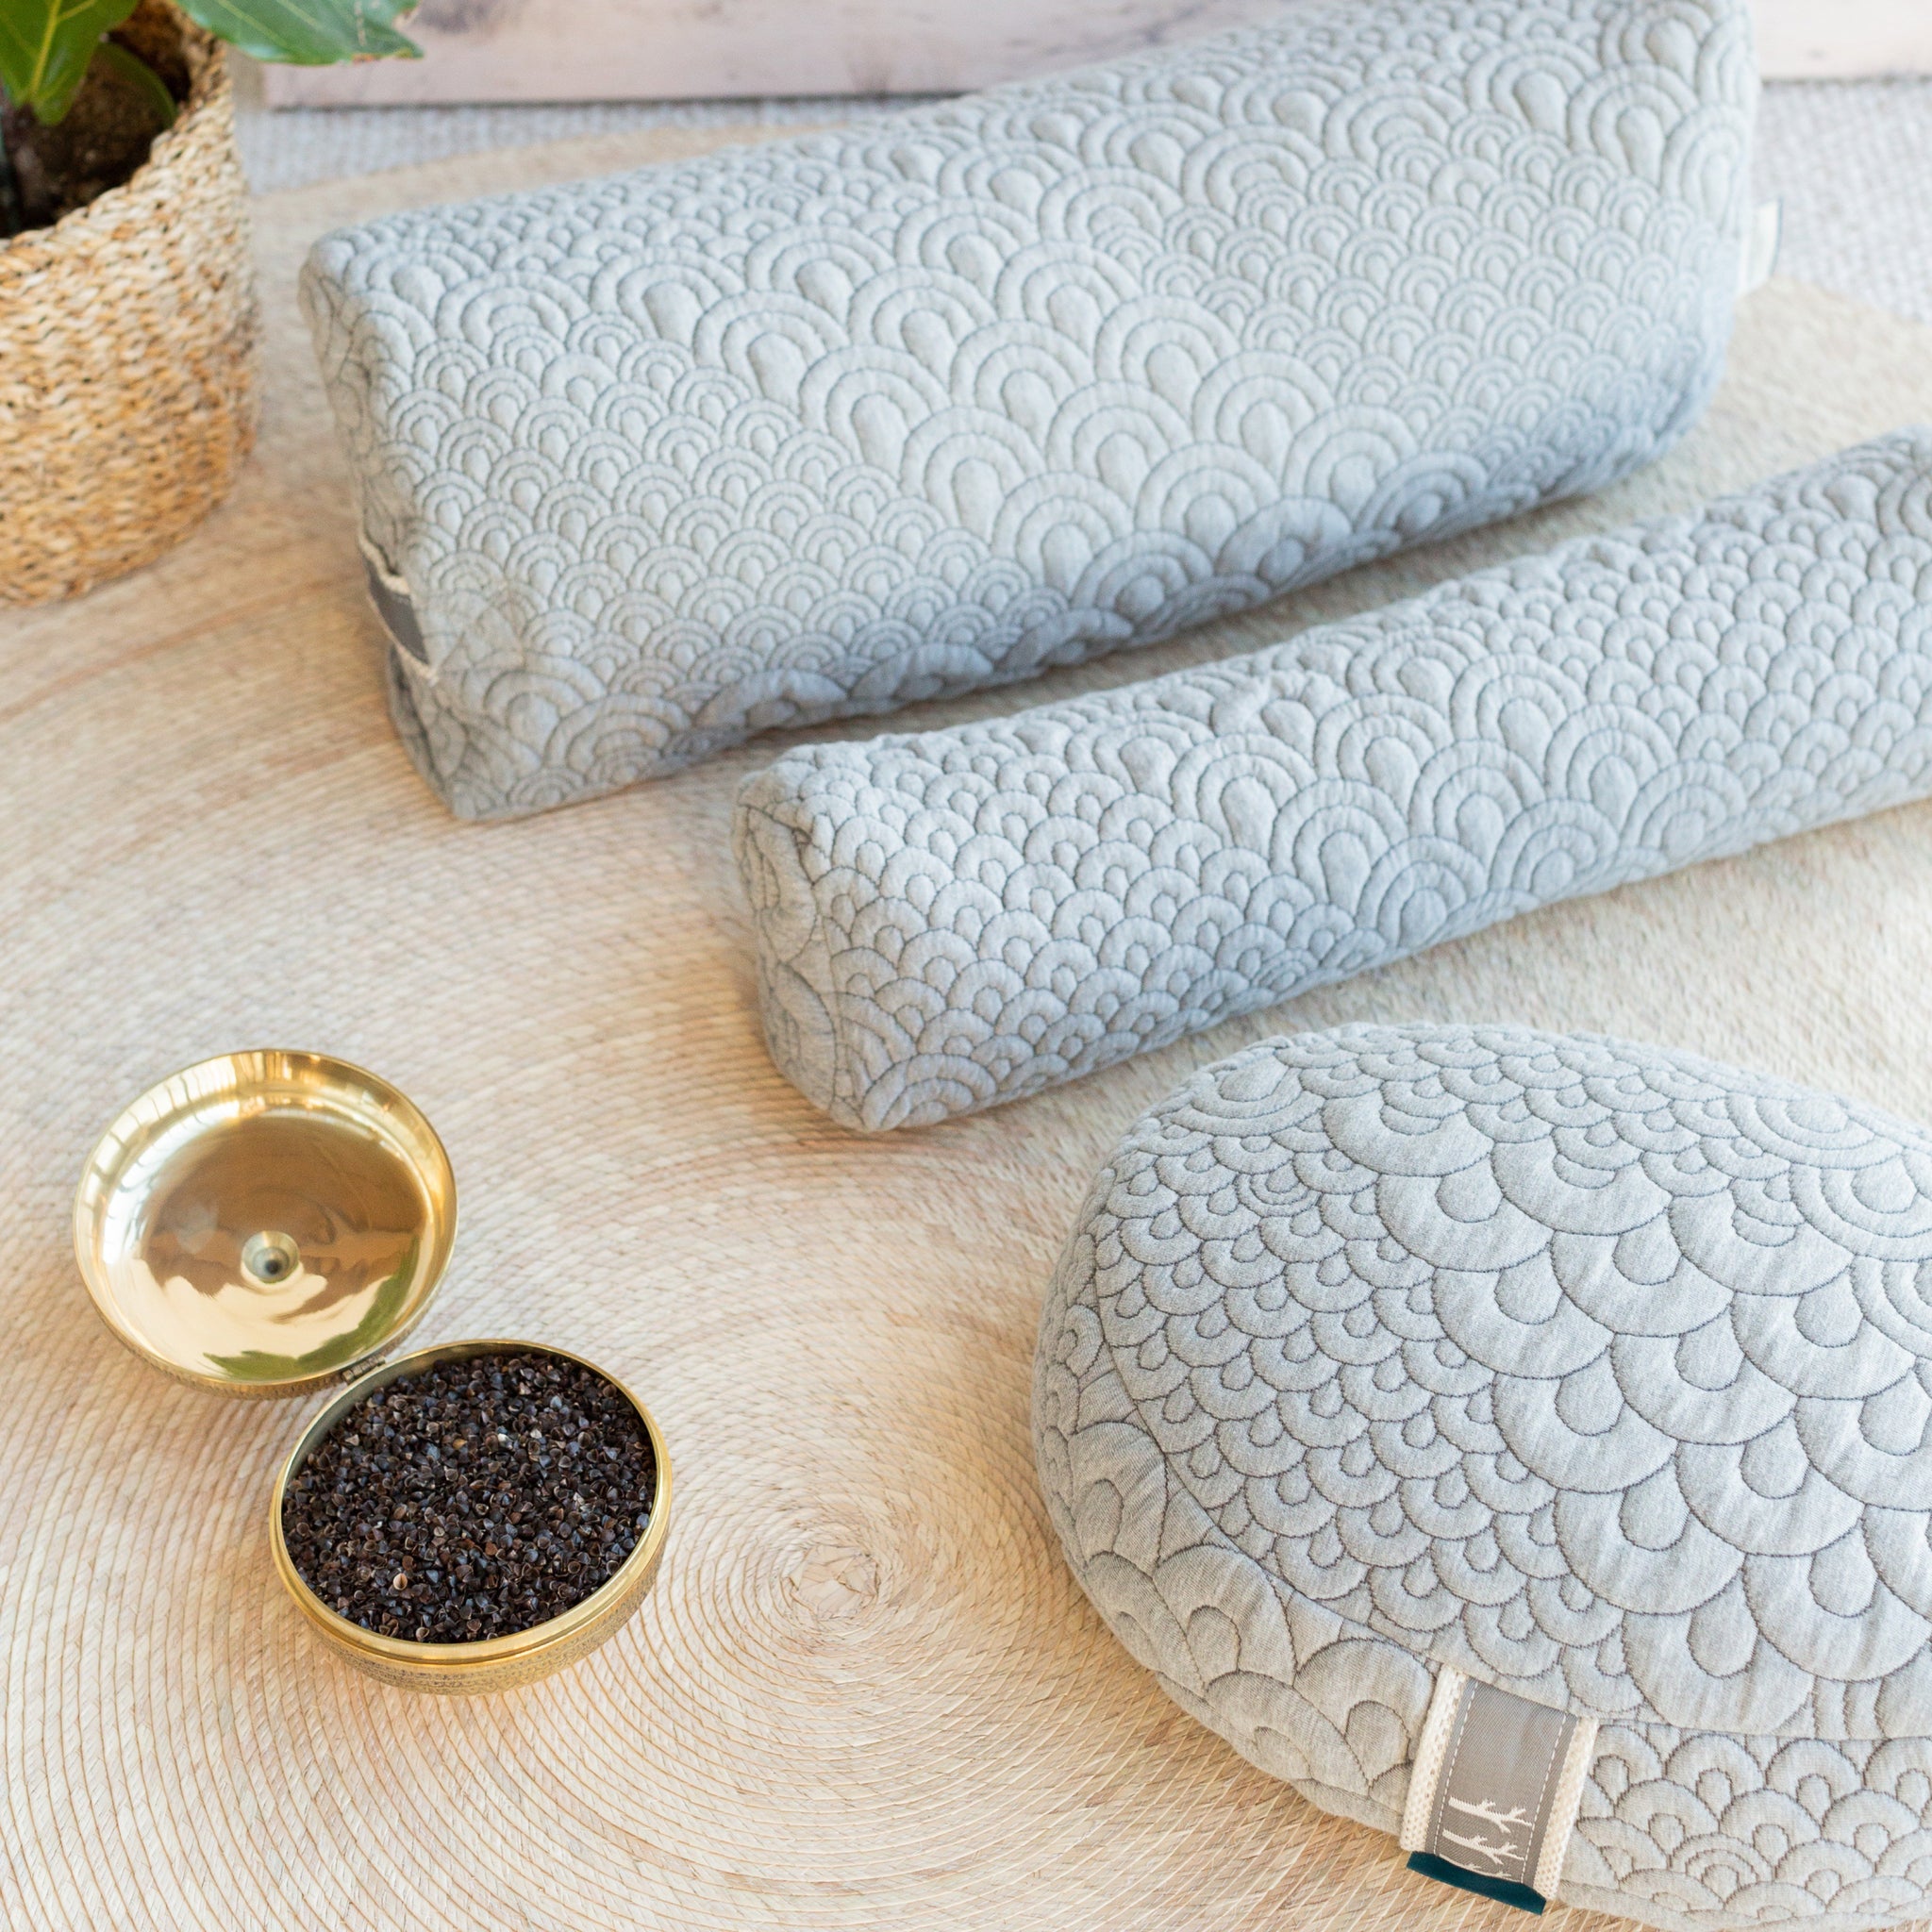 REEHUT Zafu Yoga Meditation Cushion, Round Meditation Pillow Filled with  Buckwheat, Zippered Organic Cotton Cover, Machine Washable - 4 Colors and 3  Sizes